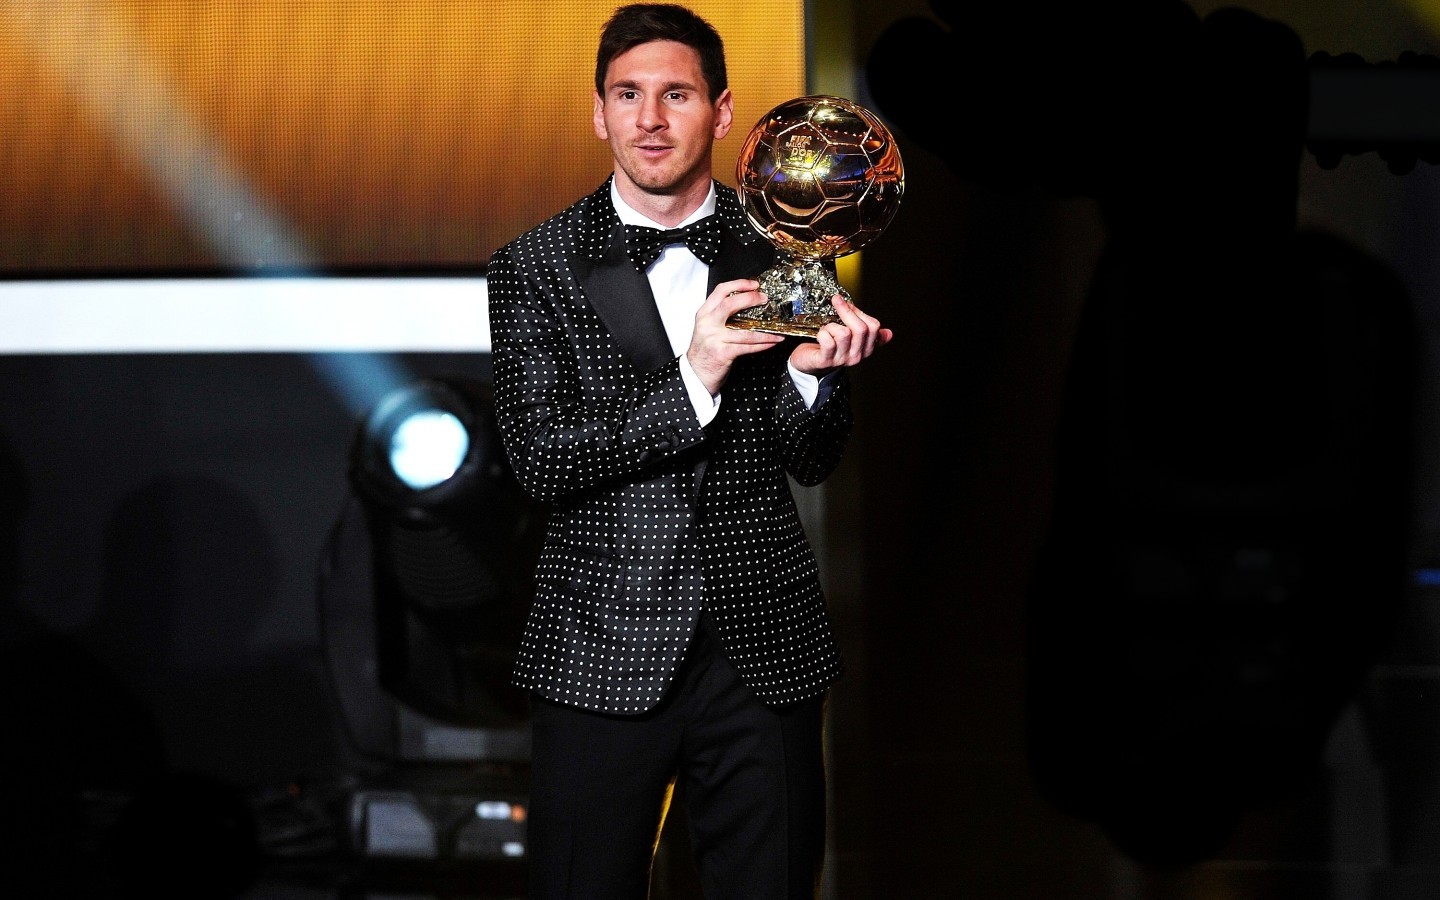 Los mejores fondos de pantalla de Lionel Andrés Messi para la pantalla del teléfono